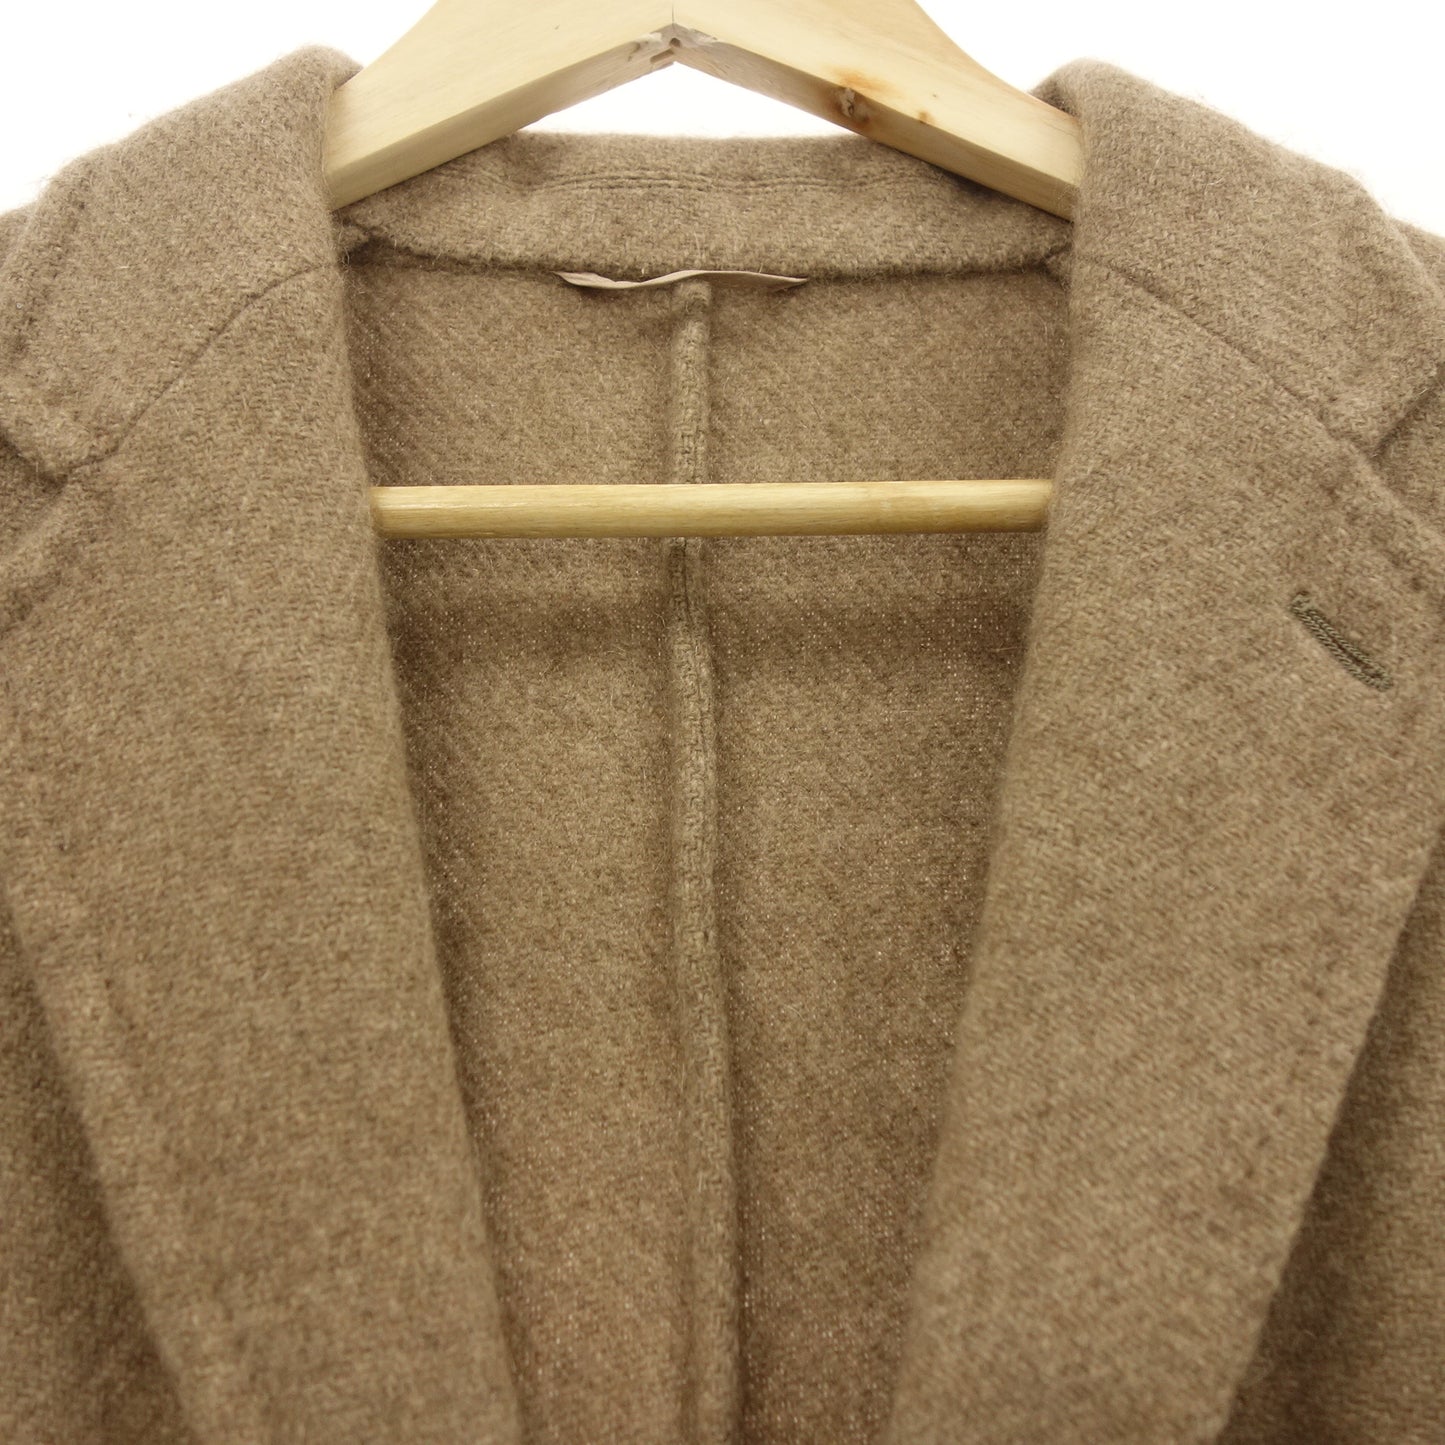 Like new◆Komori Chester coat S03-04012 Cashmere Beige Size 1 Men's COMOLI [AFA21] 